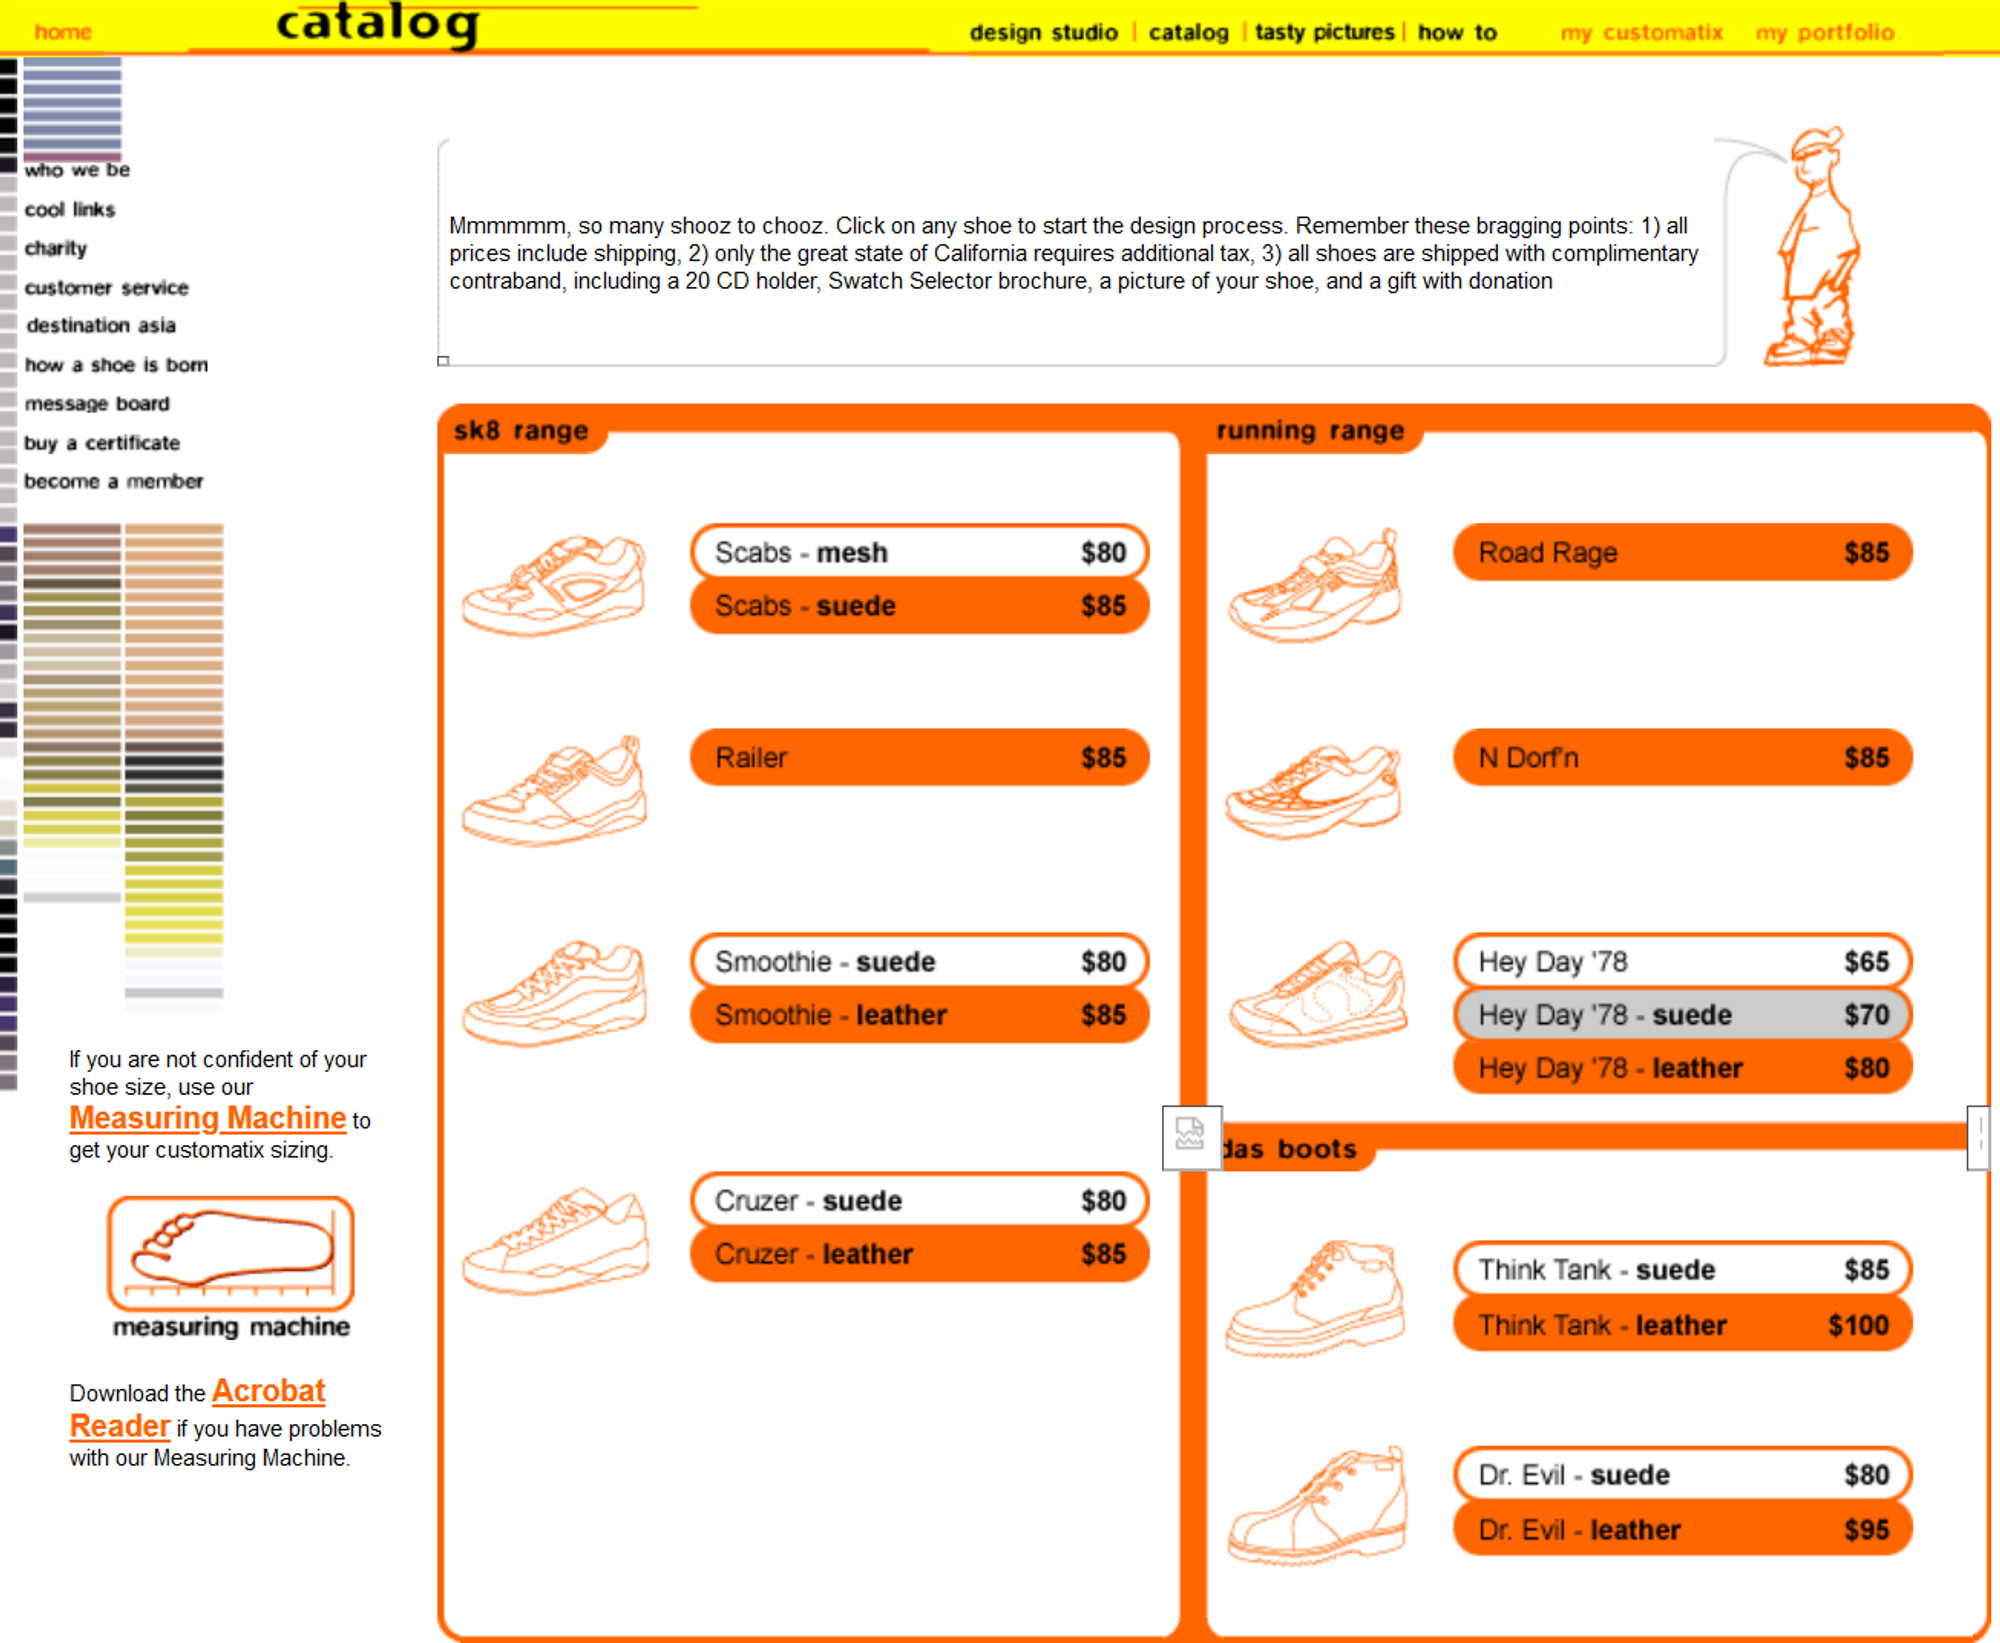  customatix.com shoe configurator (2000)